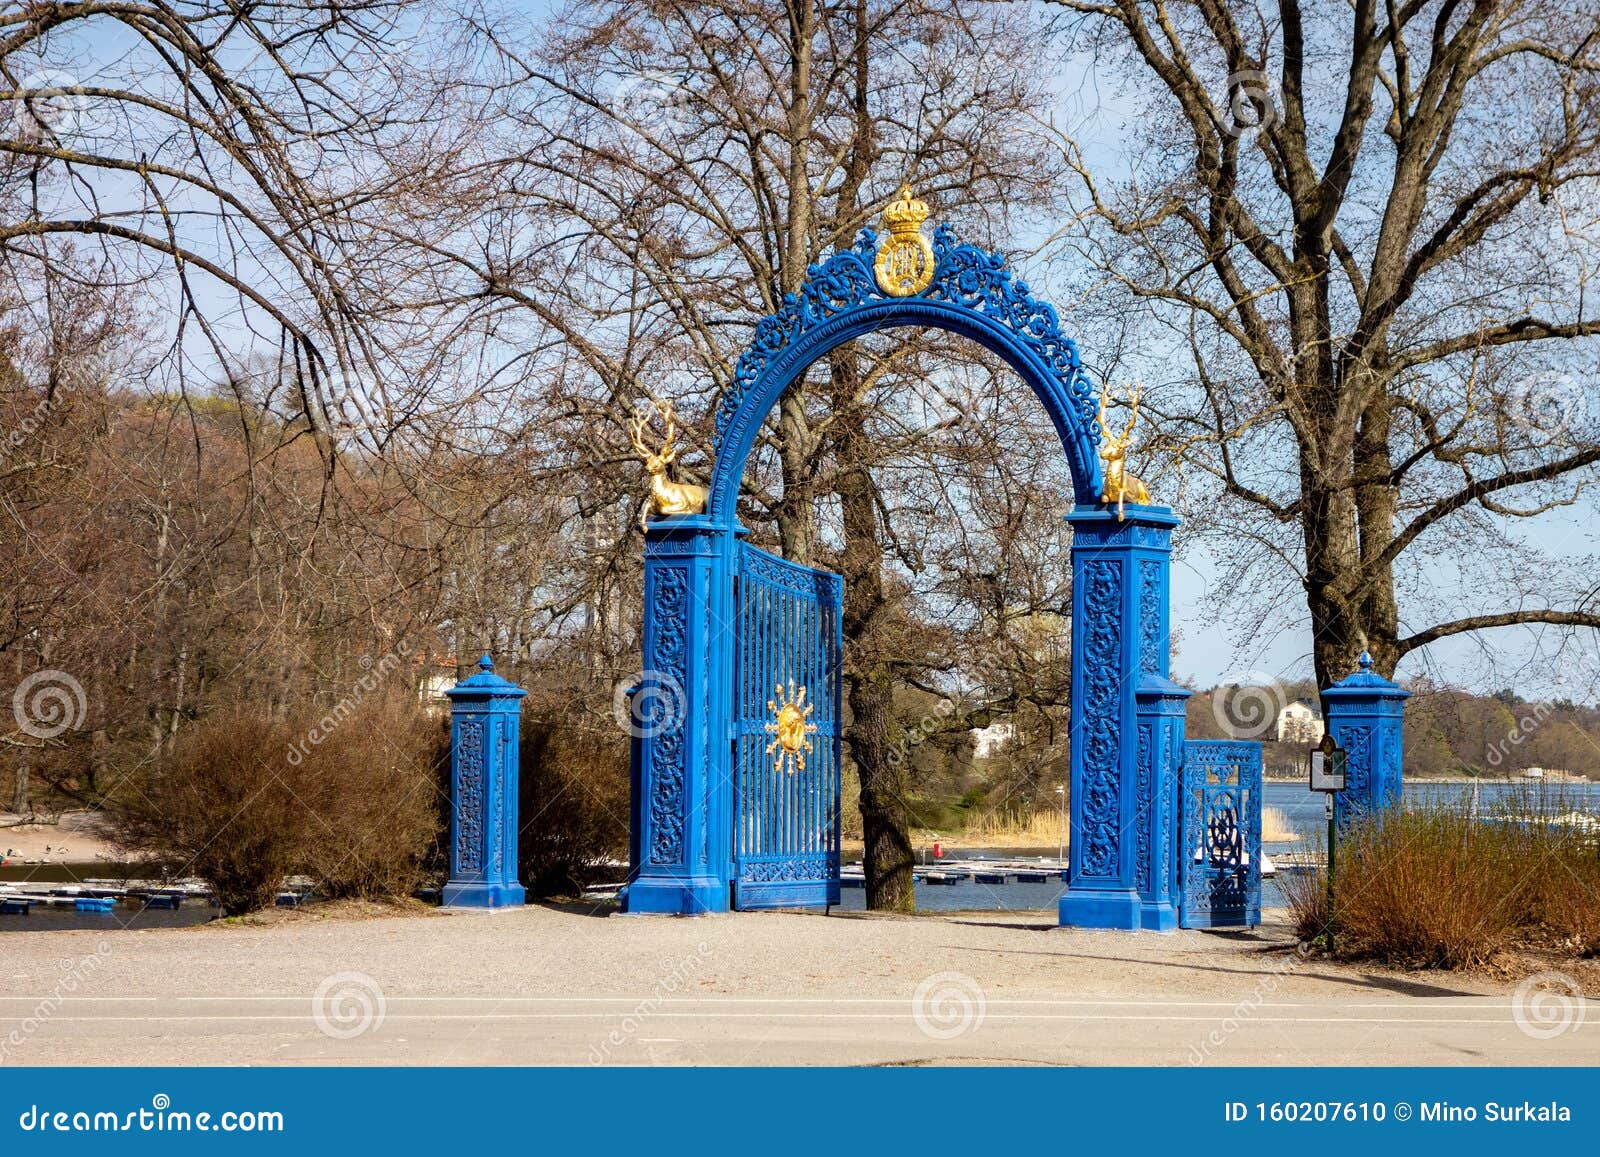 ancient blue gate as an entrance to royal djurgarden kungliga djurgarden in stockholm